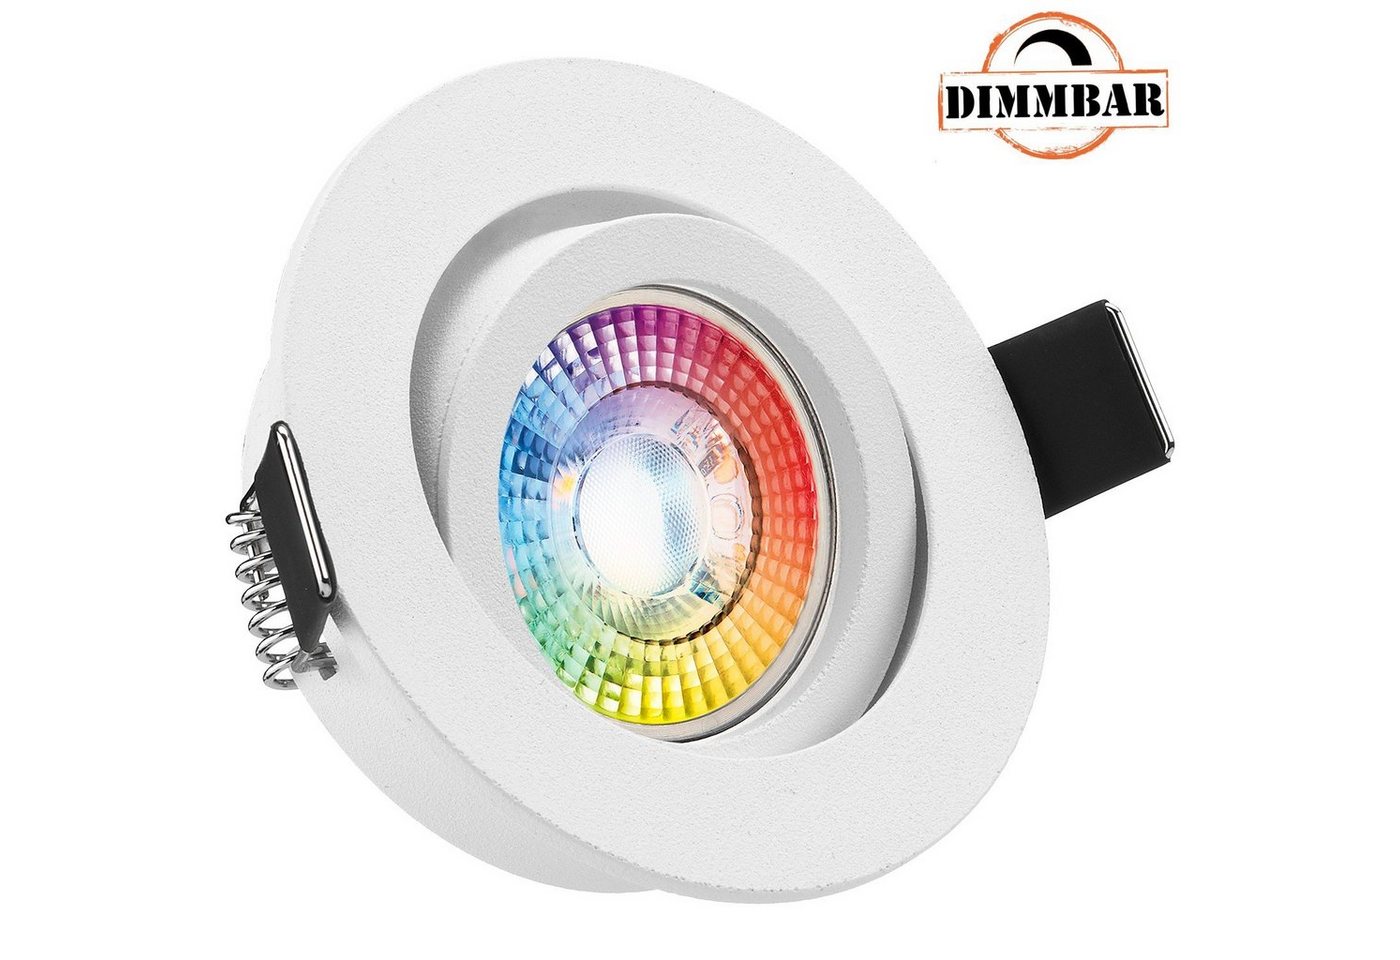 LEDANDO LED Einbaustrahler »RGB LED Einbaustrahler Set extra flach in weiß matt mit 3W LED von LEDANDO - 11 Farben + Warmweiß - inkl. Fernbedienung - dimmbar« von LEDANDO